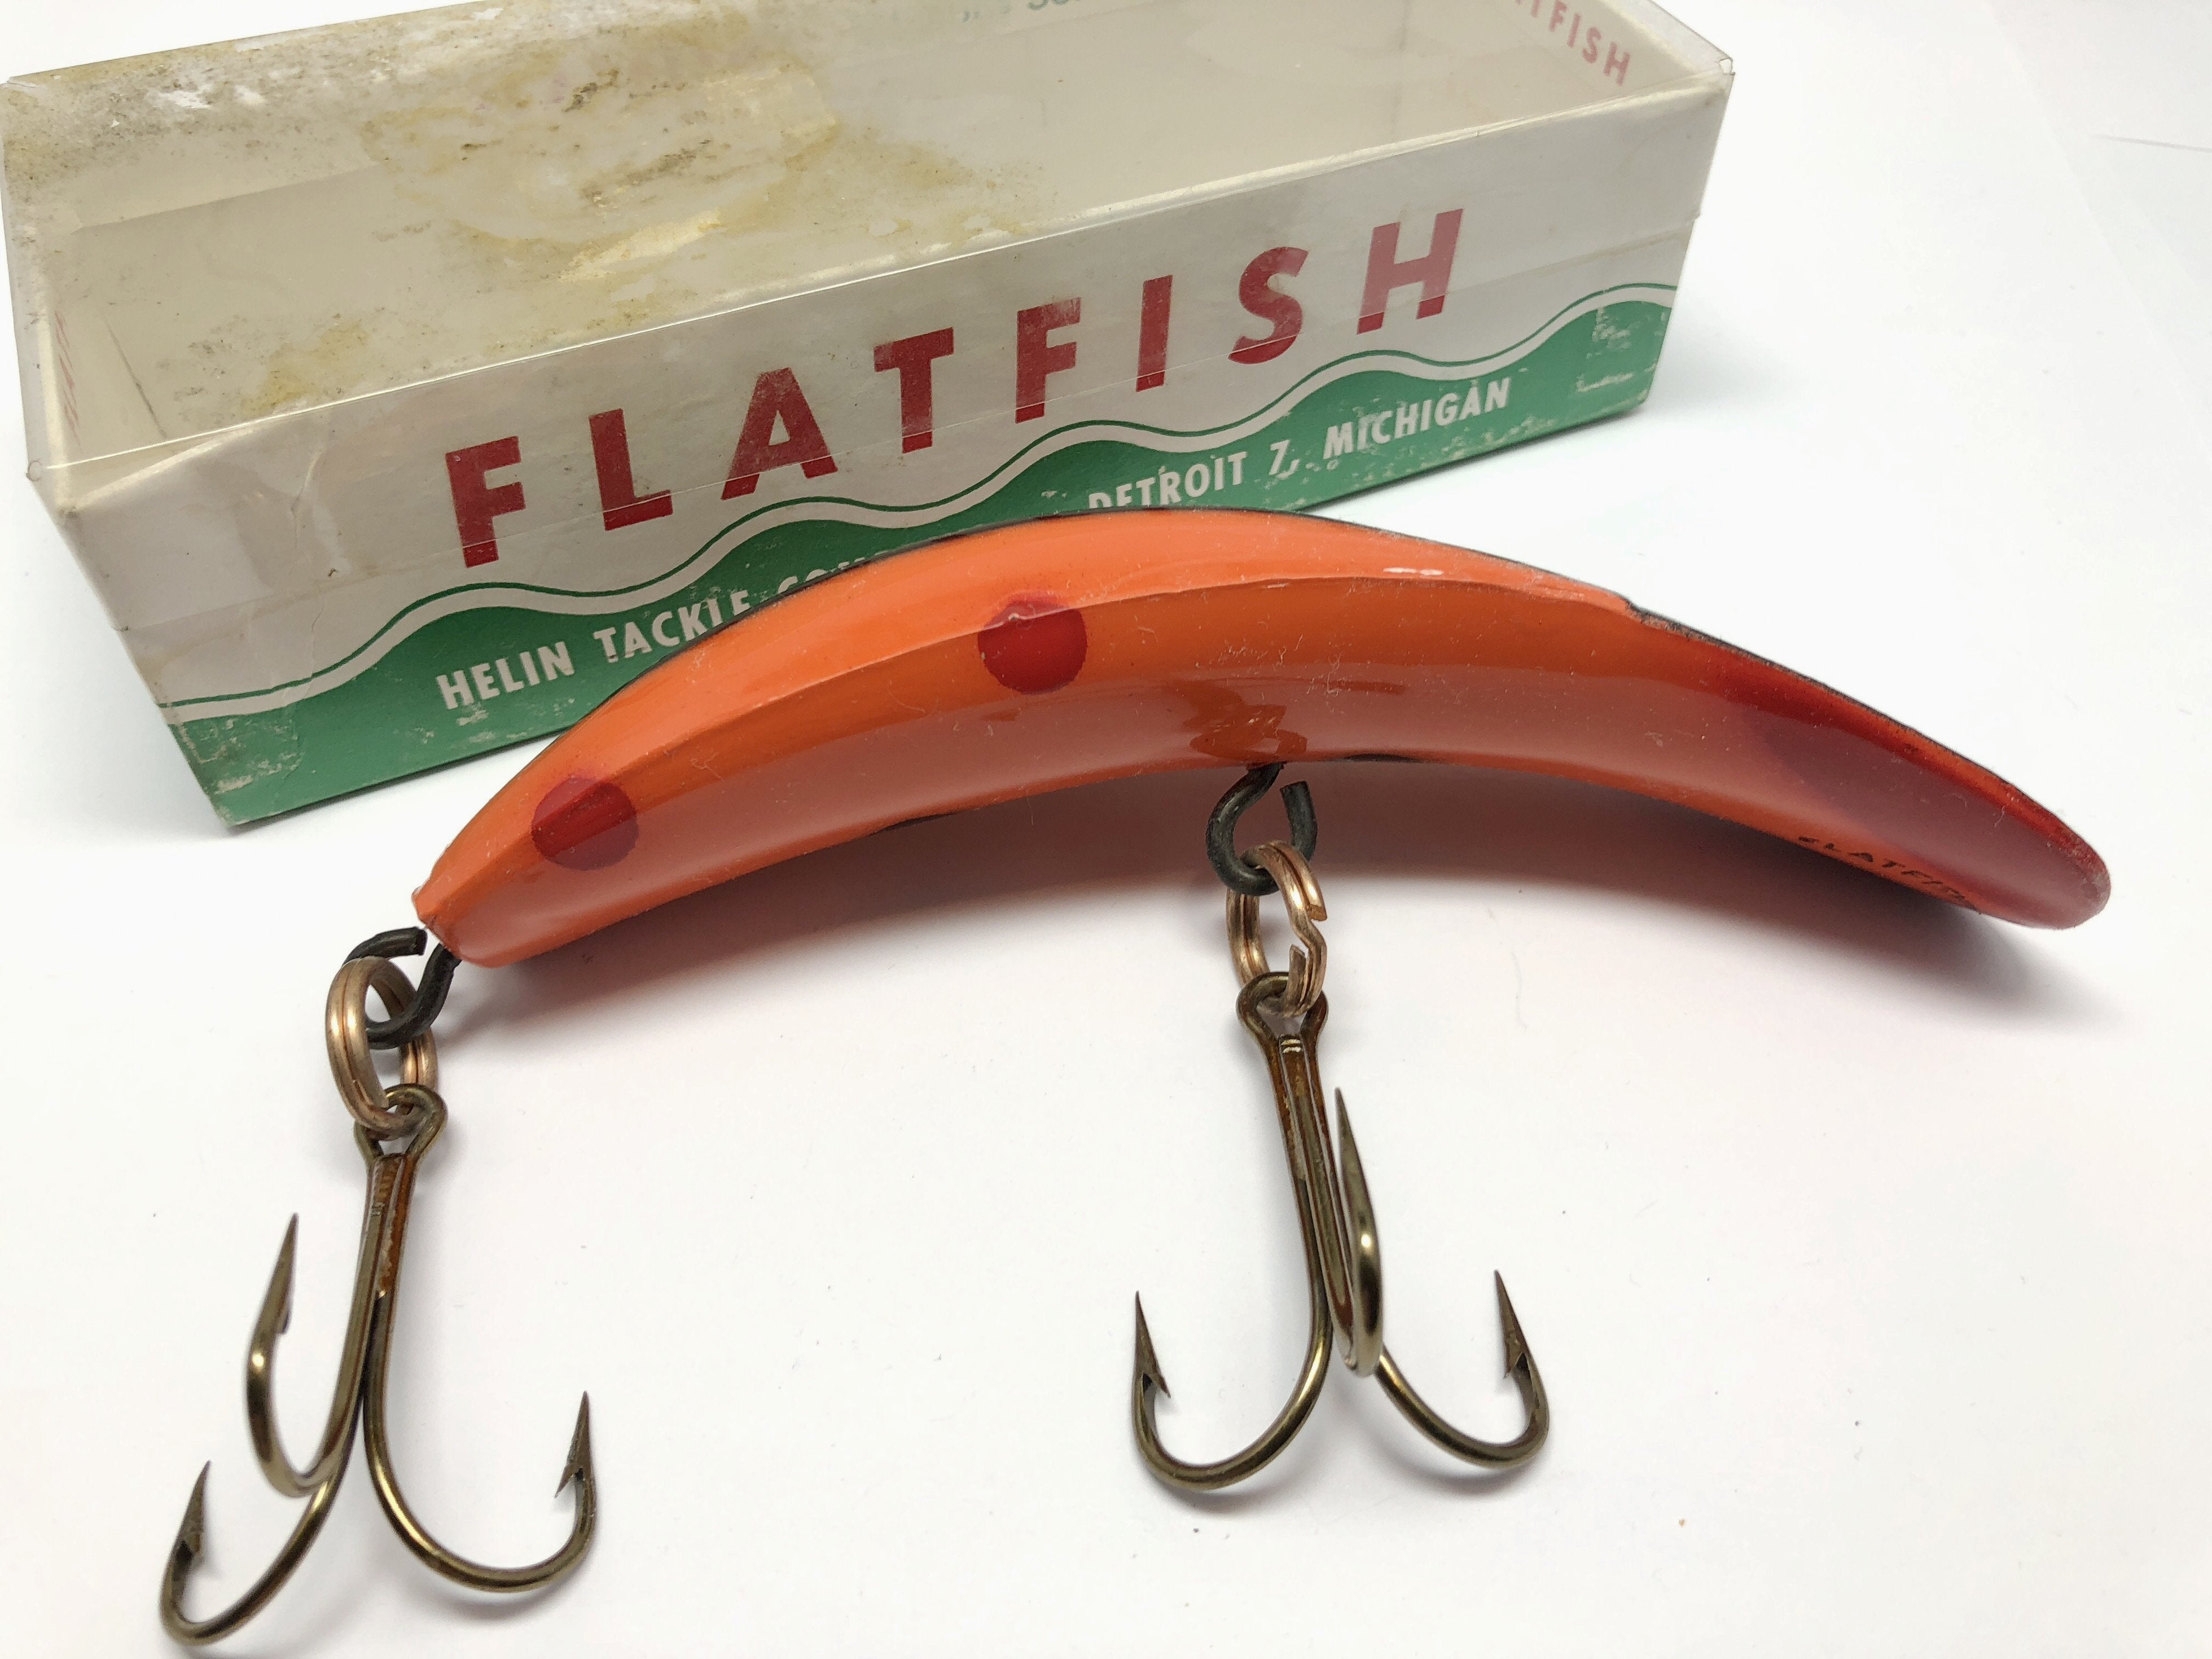 Helin Flatfish T60 OB Orange and Black New in Box – My Bait Shop, LLC